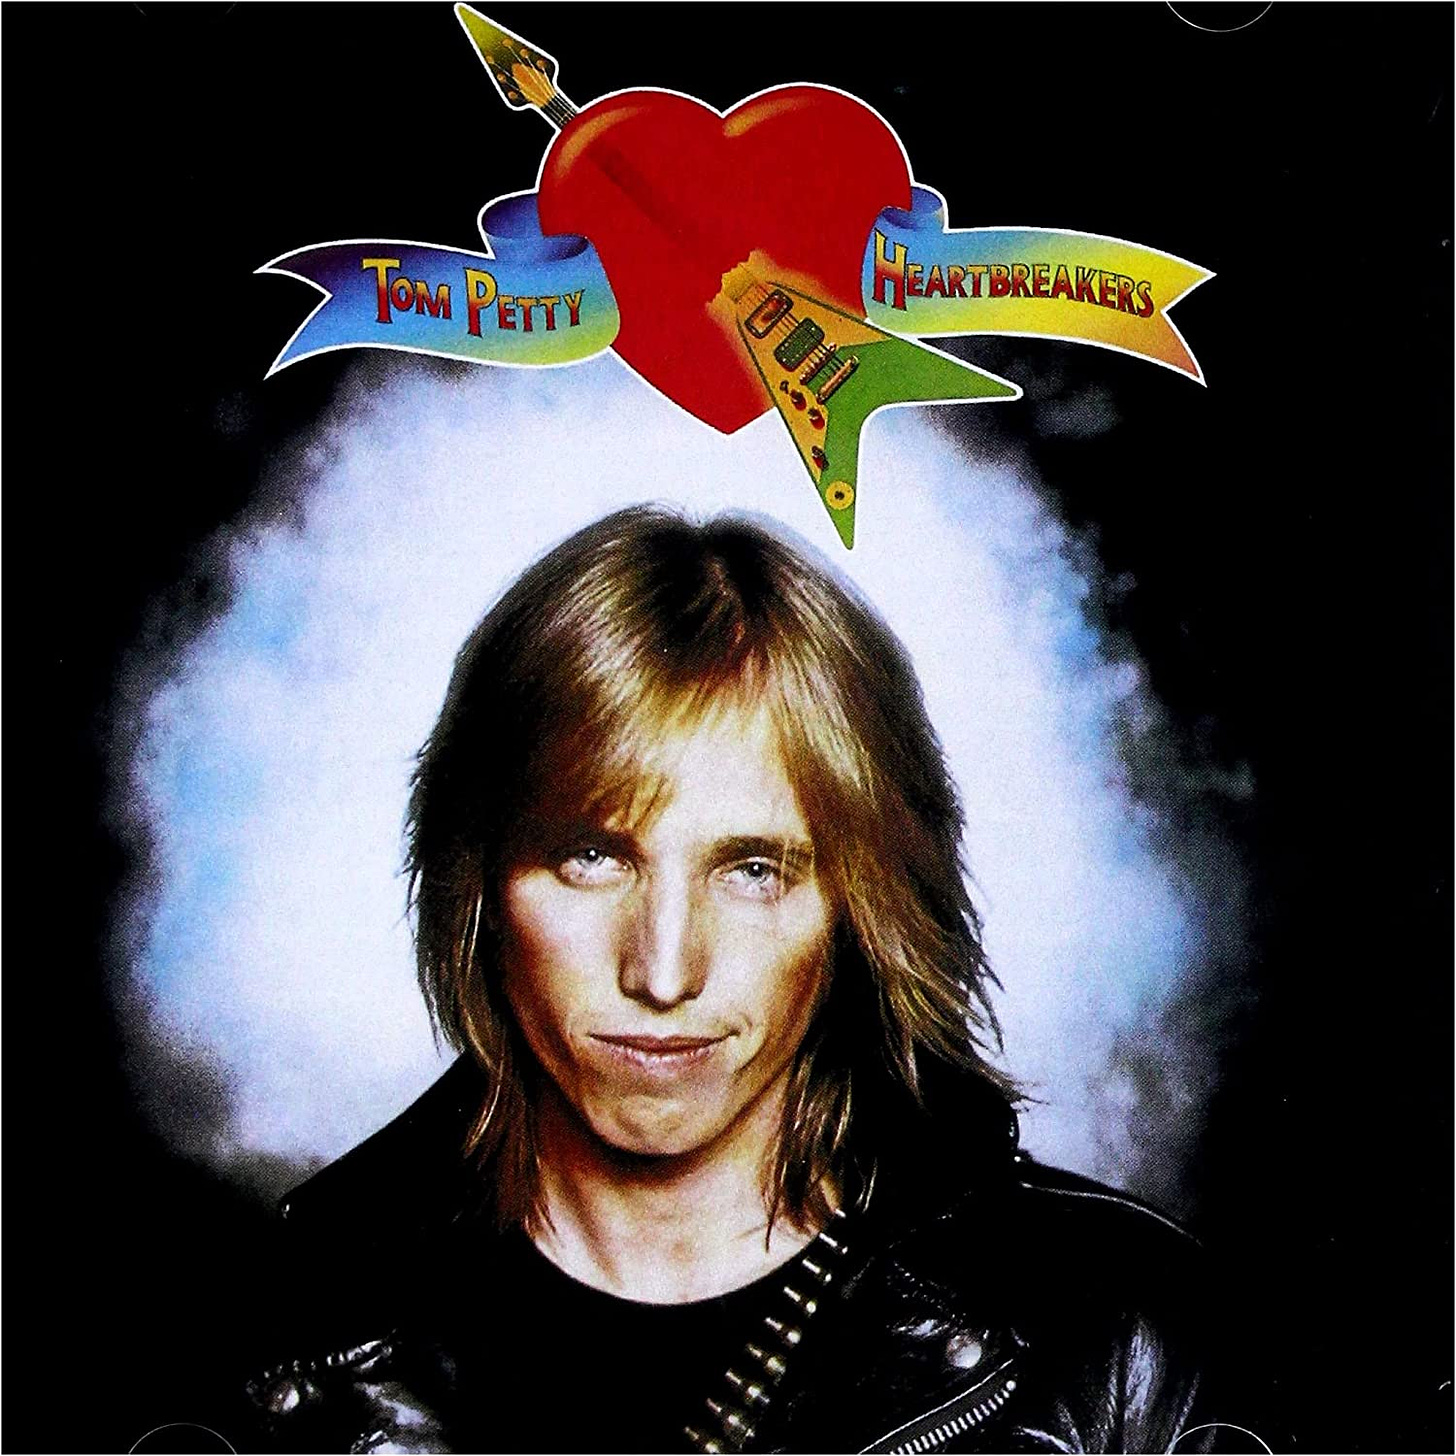 Tom Petty & The Heartbreakers: Amazon.co.uk: CDs & Vinyl